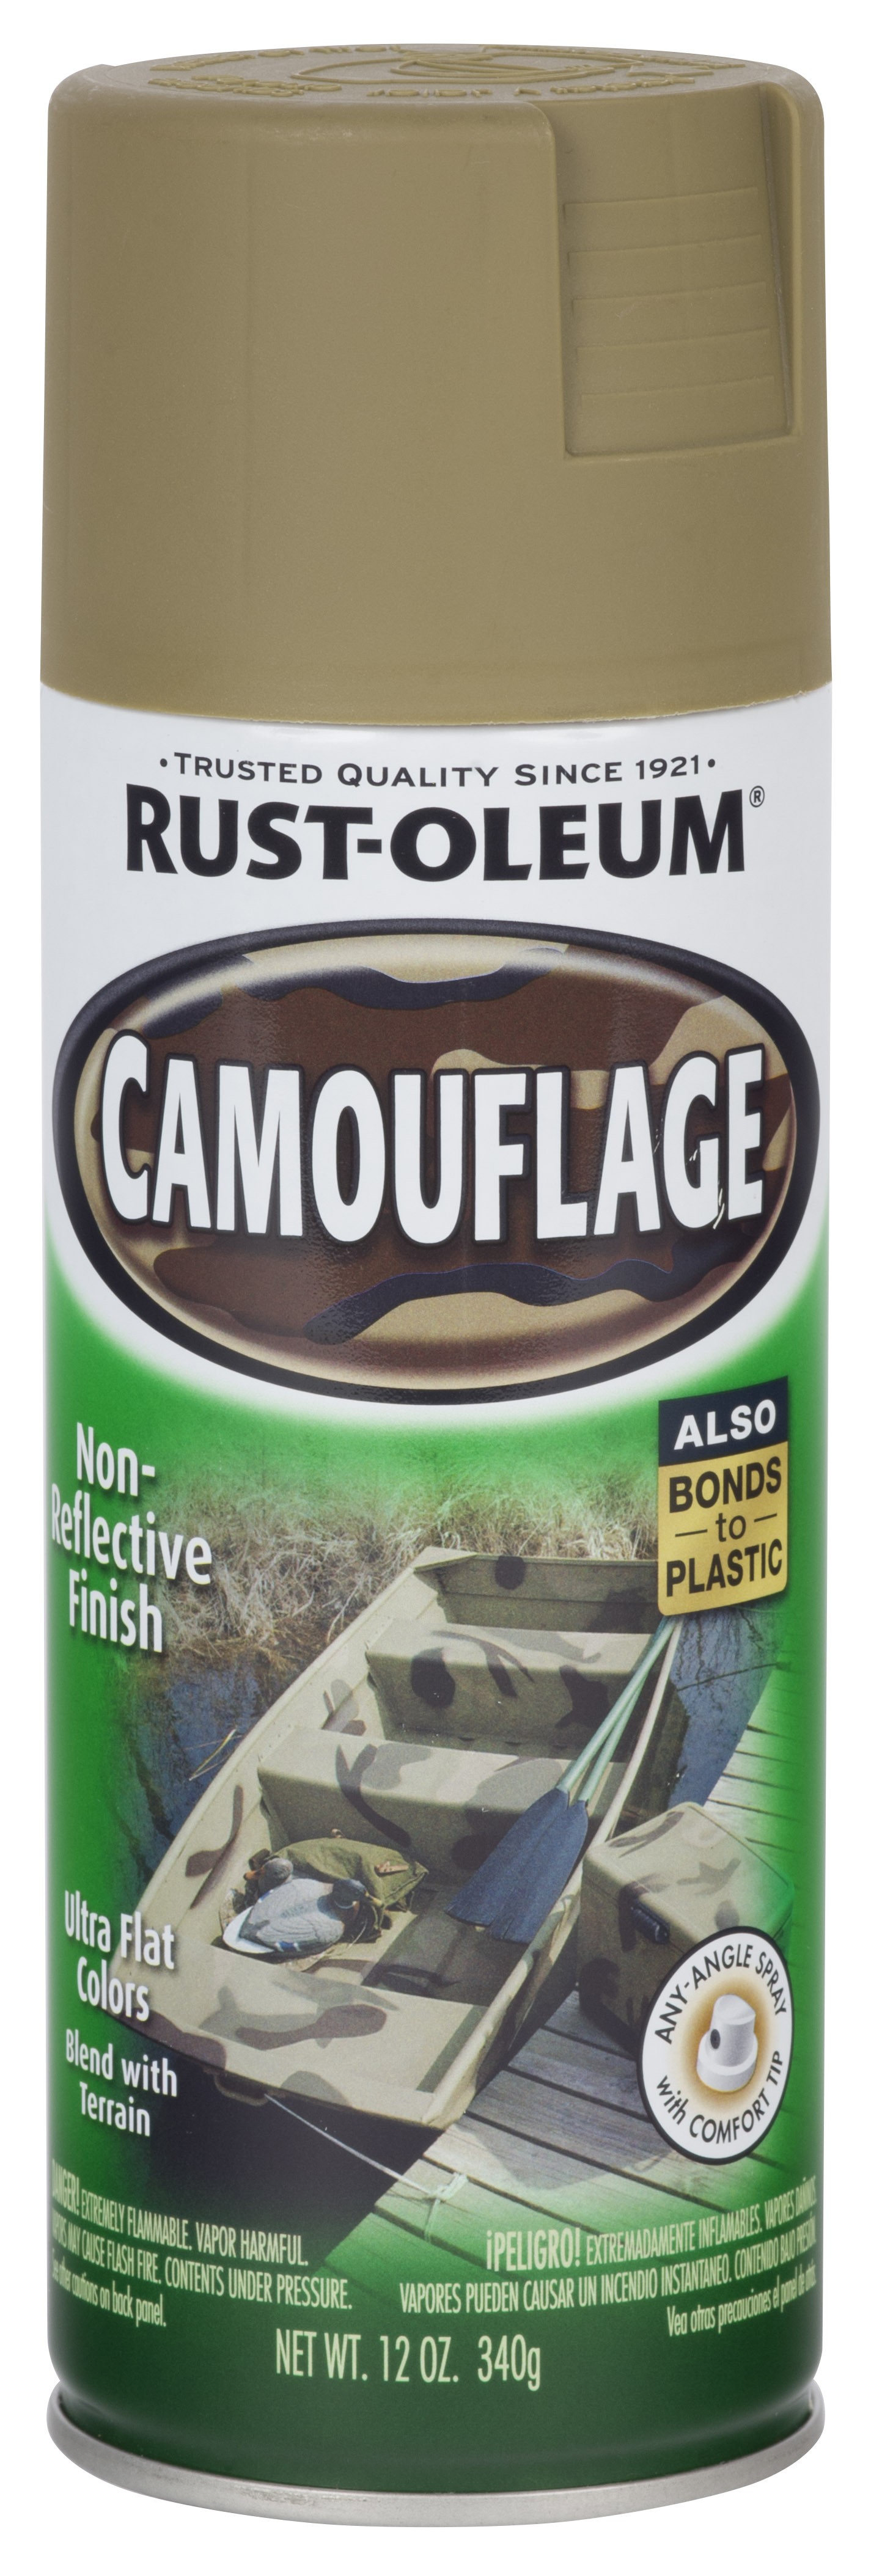 Camouflage - Camuflado